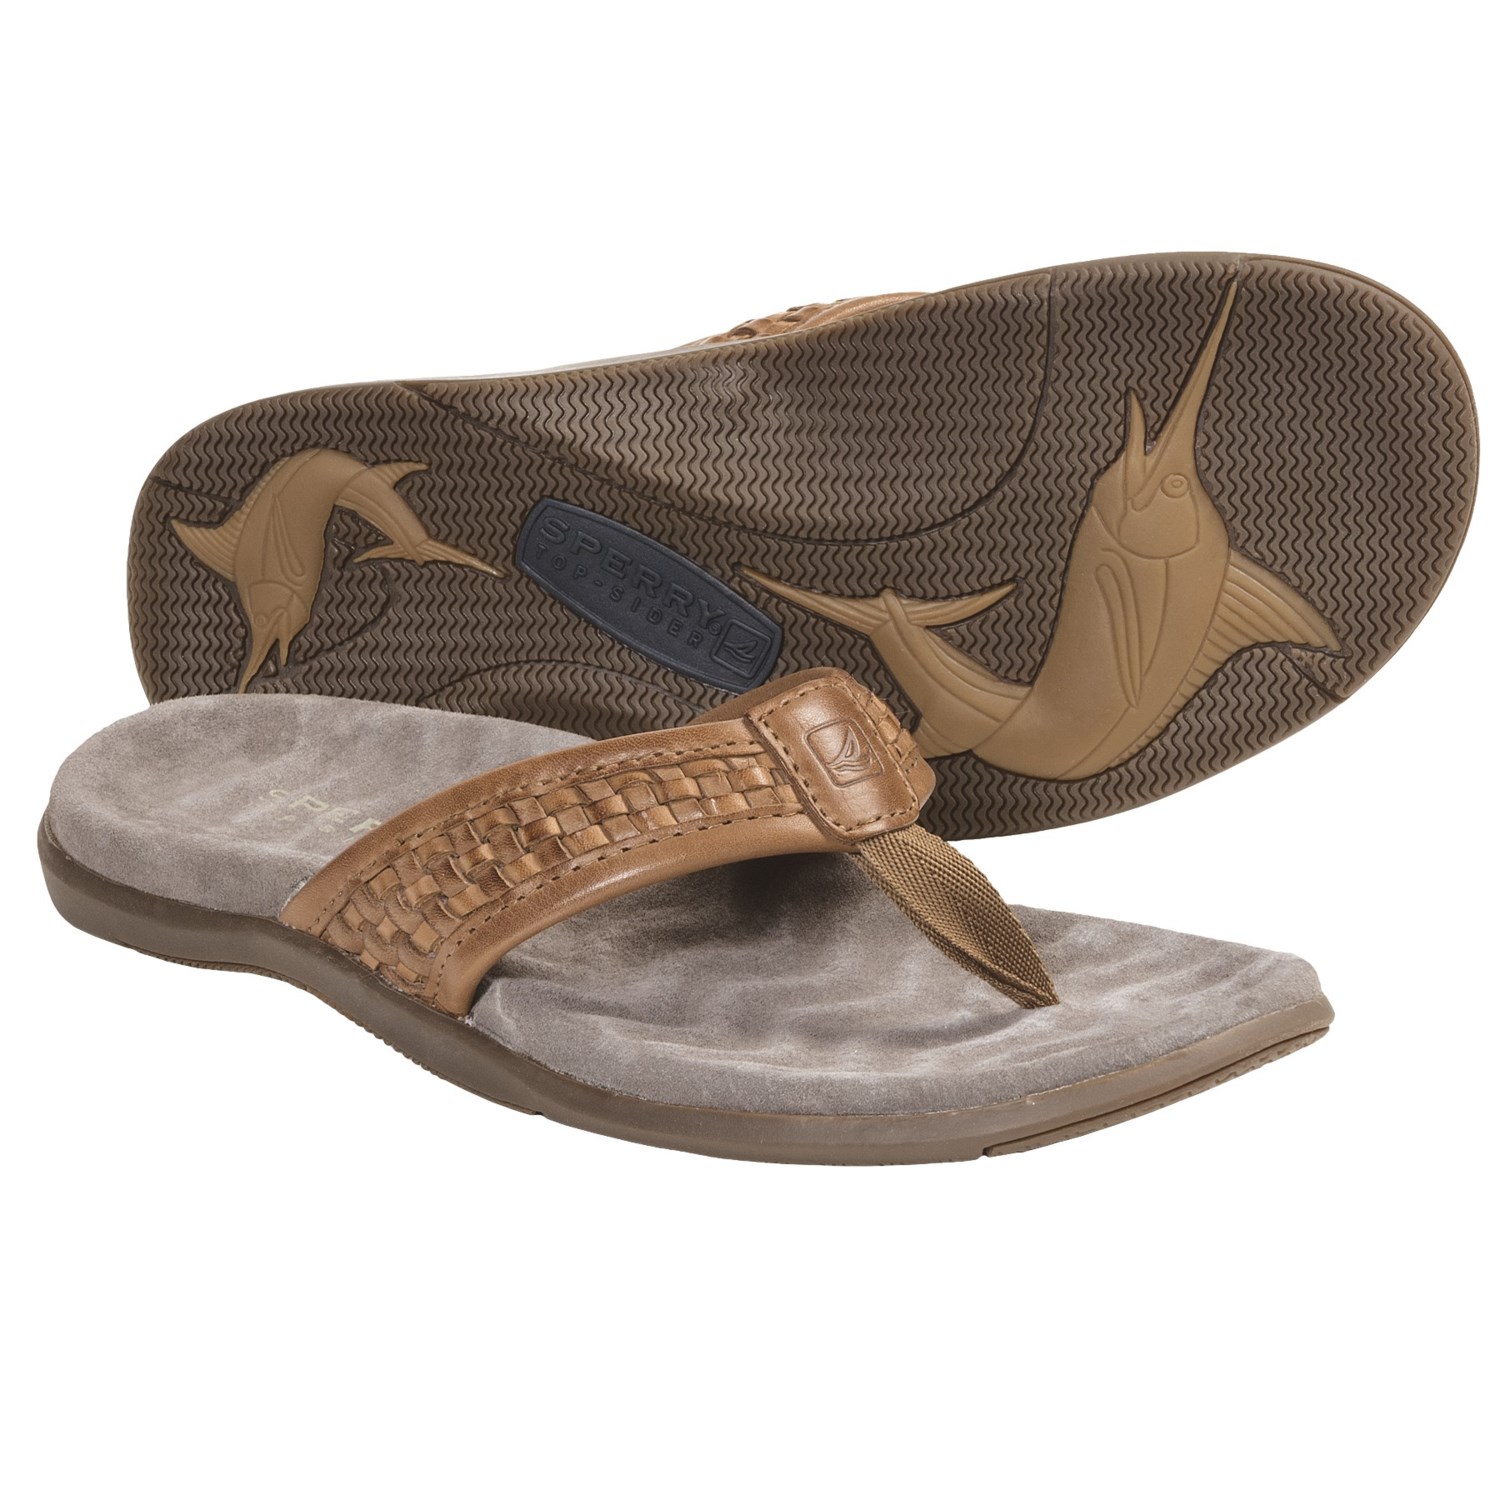 Sperry Top-Sider Largo Sandals - Leather, Flip-Flops (For Men) in Tan